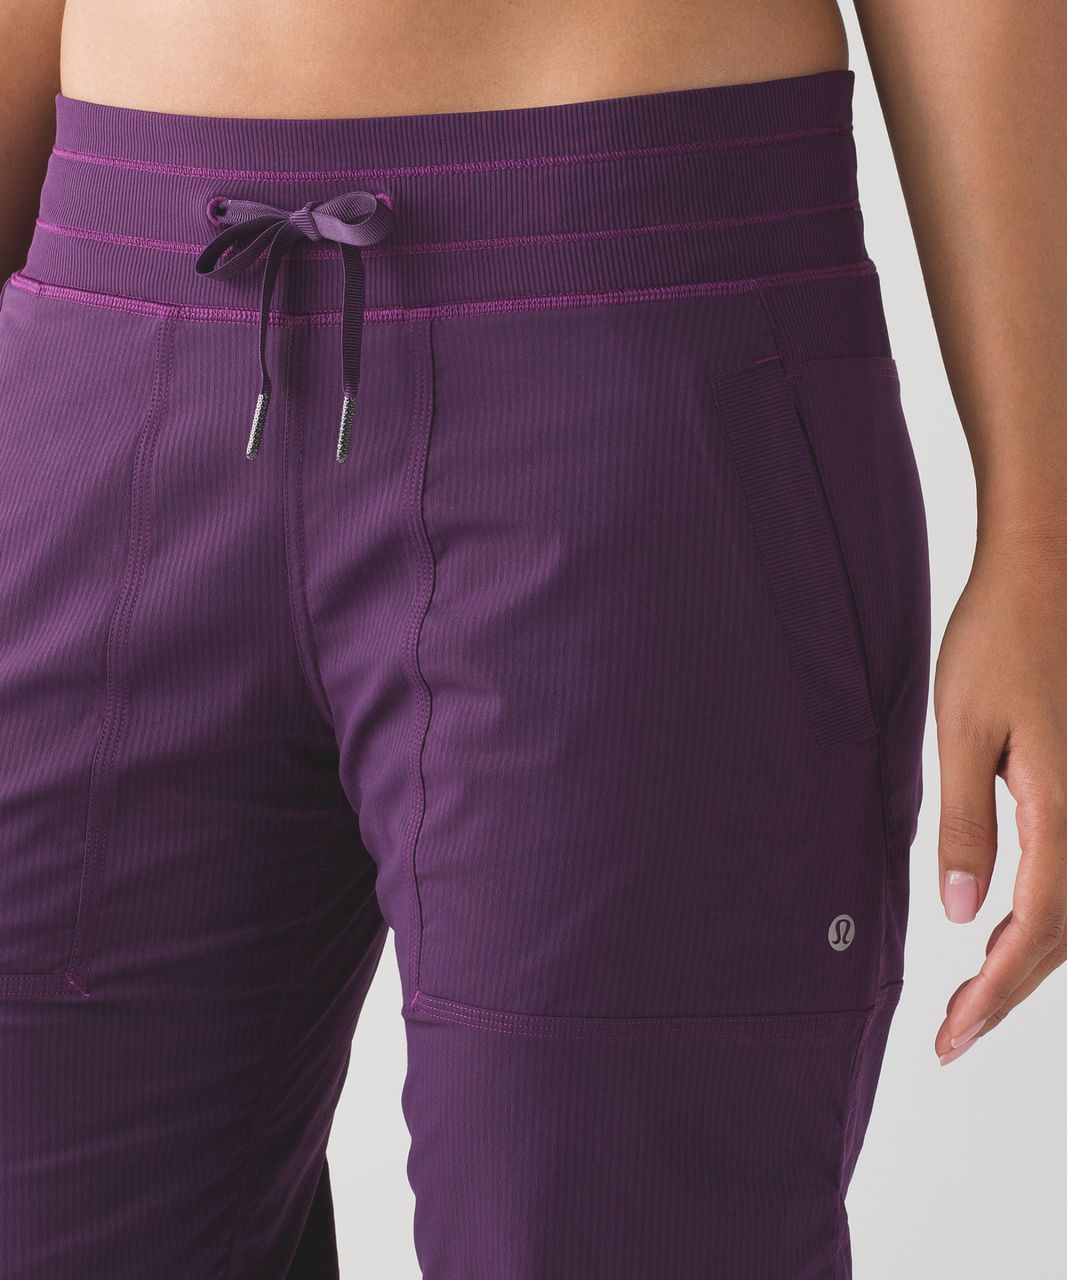 Lululemon Dance Studio Pant Purple Size 2 - $90 (23% Off Retail